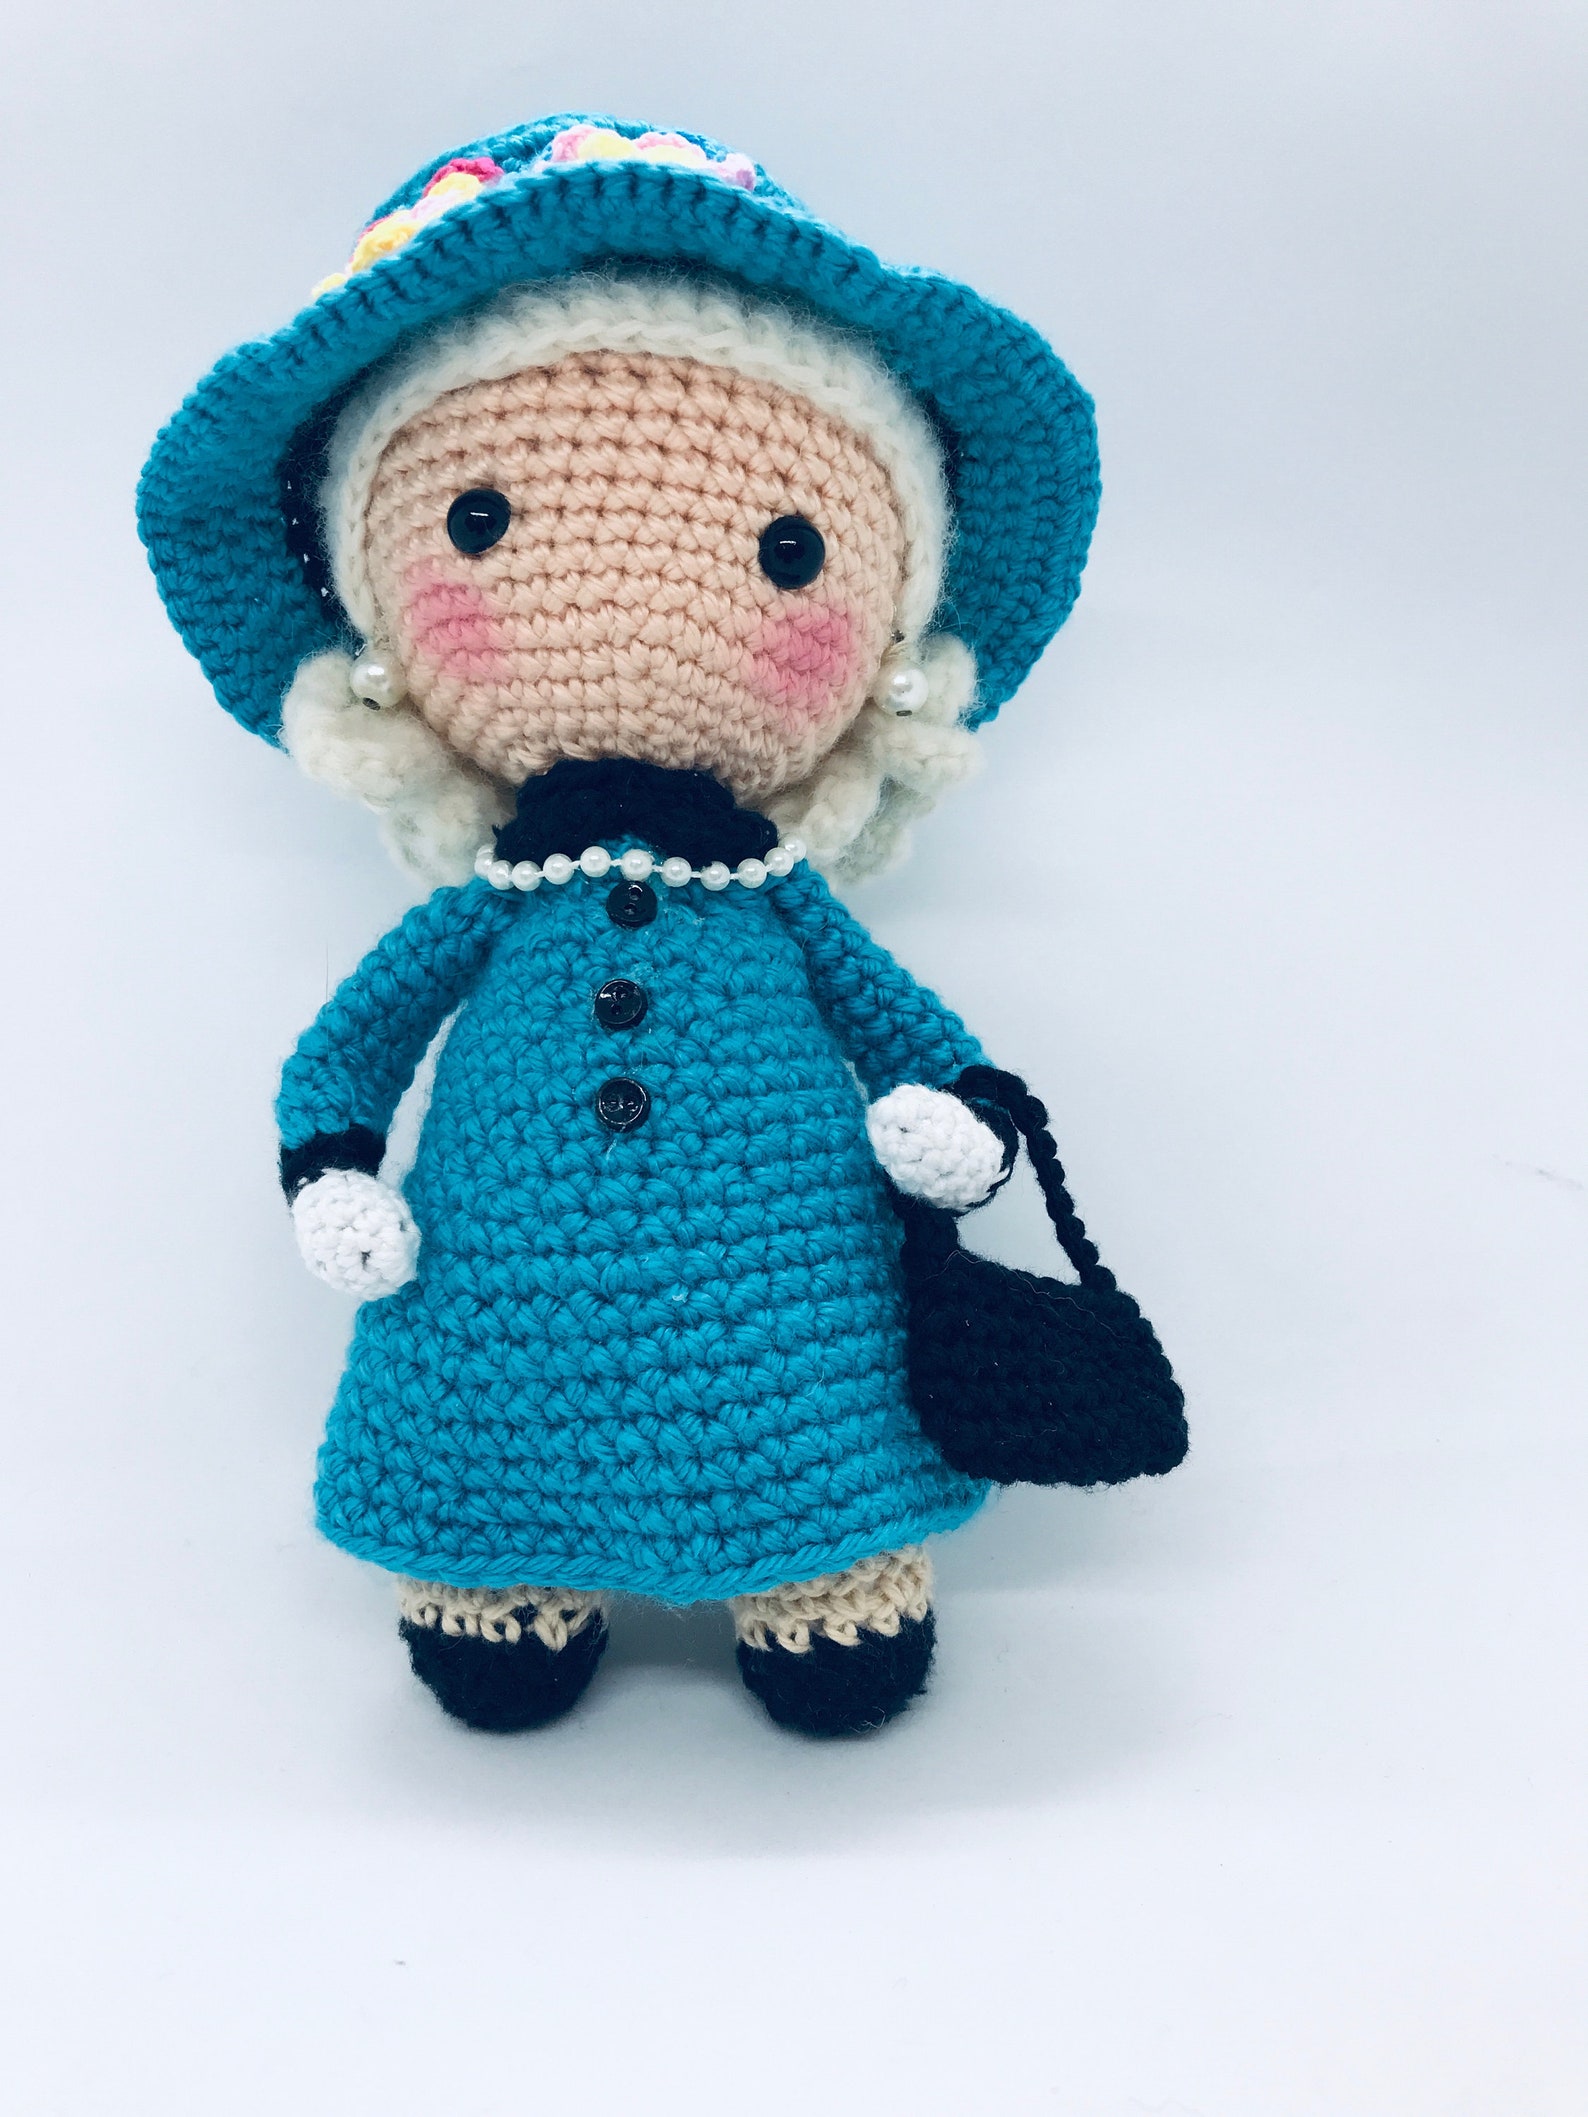 Her Majesty Queen Elizabeth hand crocheted amigurumi 8.5 inch | Etsy